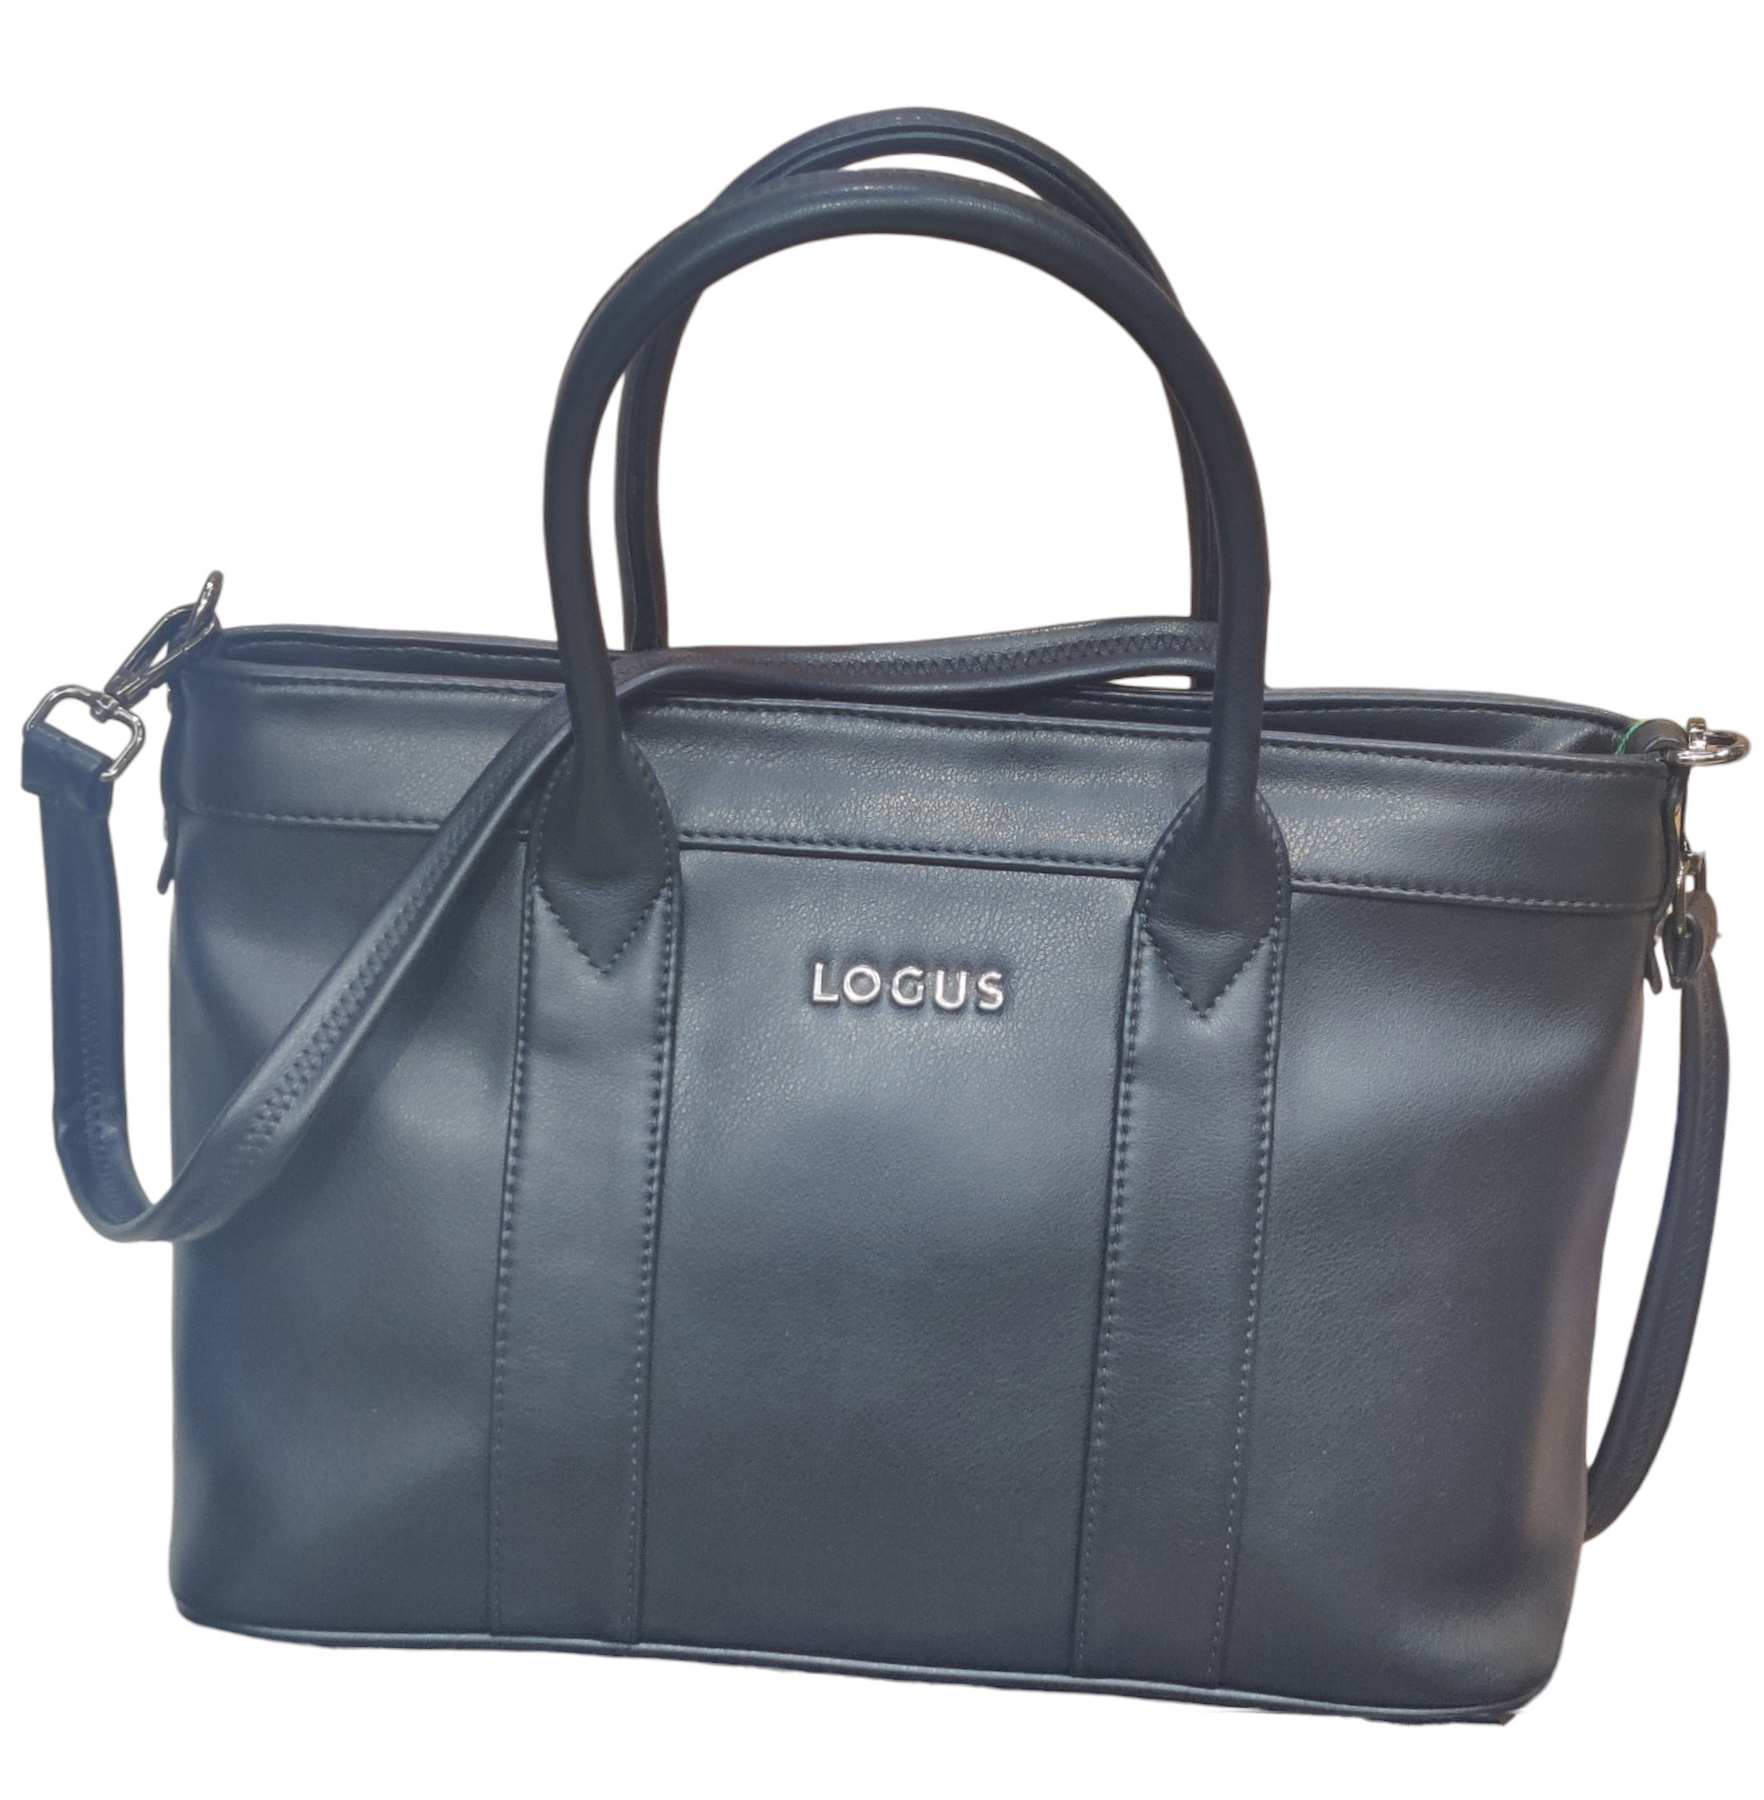 LOGUS Women's Handbag (Brown and Black) : Amazon.in: Shoes & Handbags